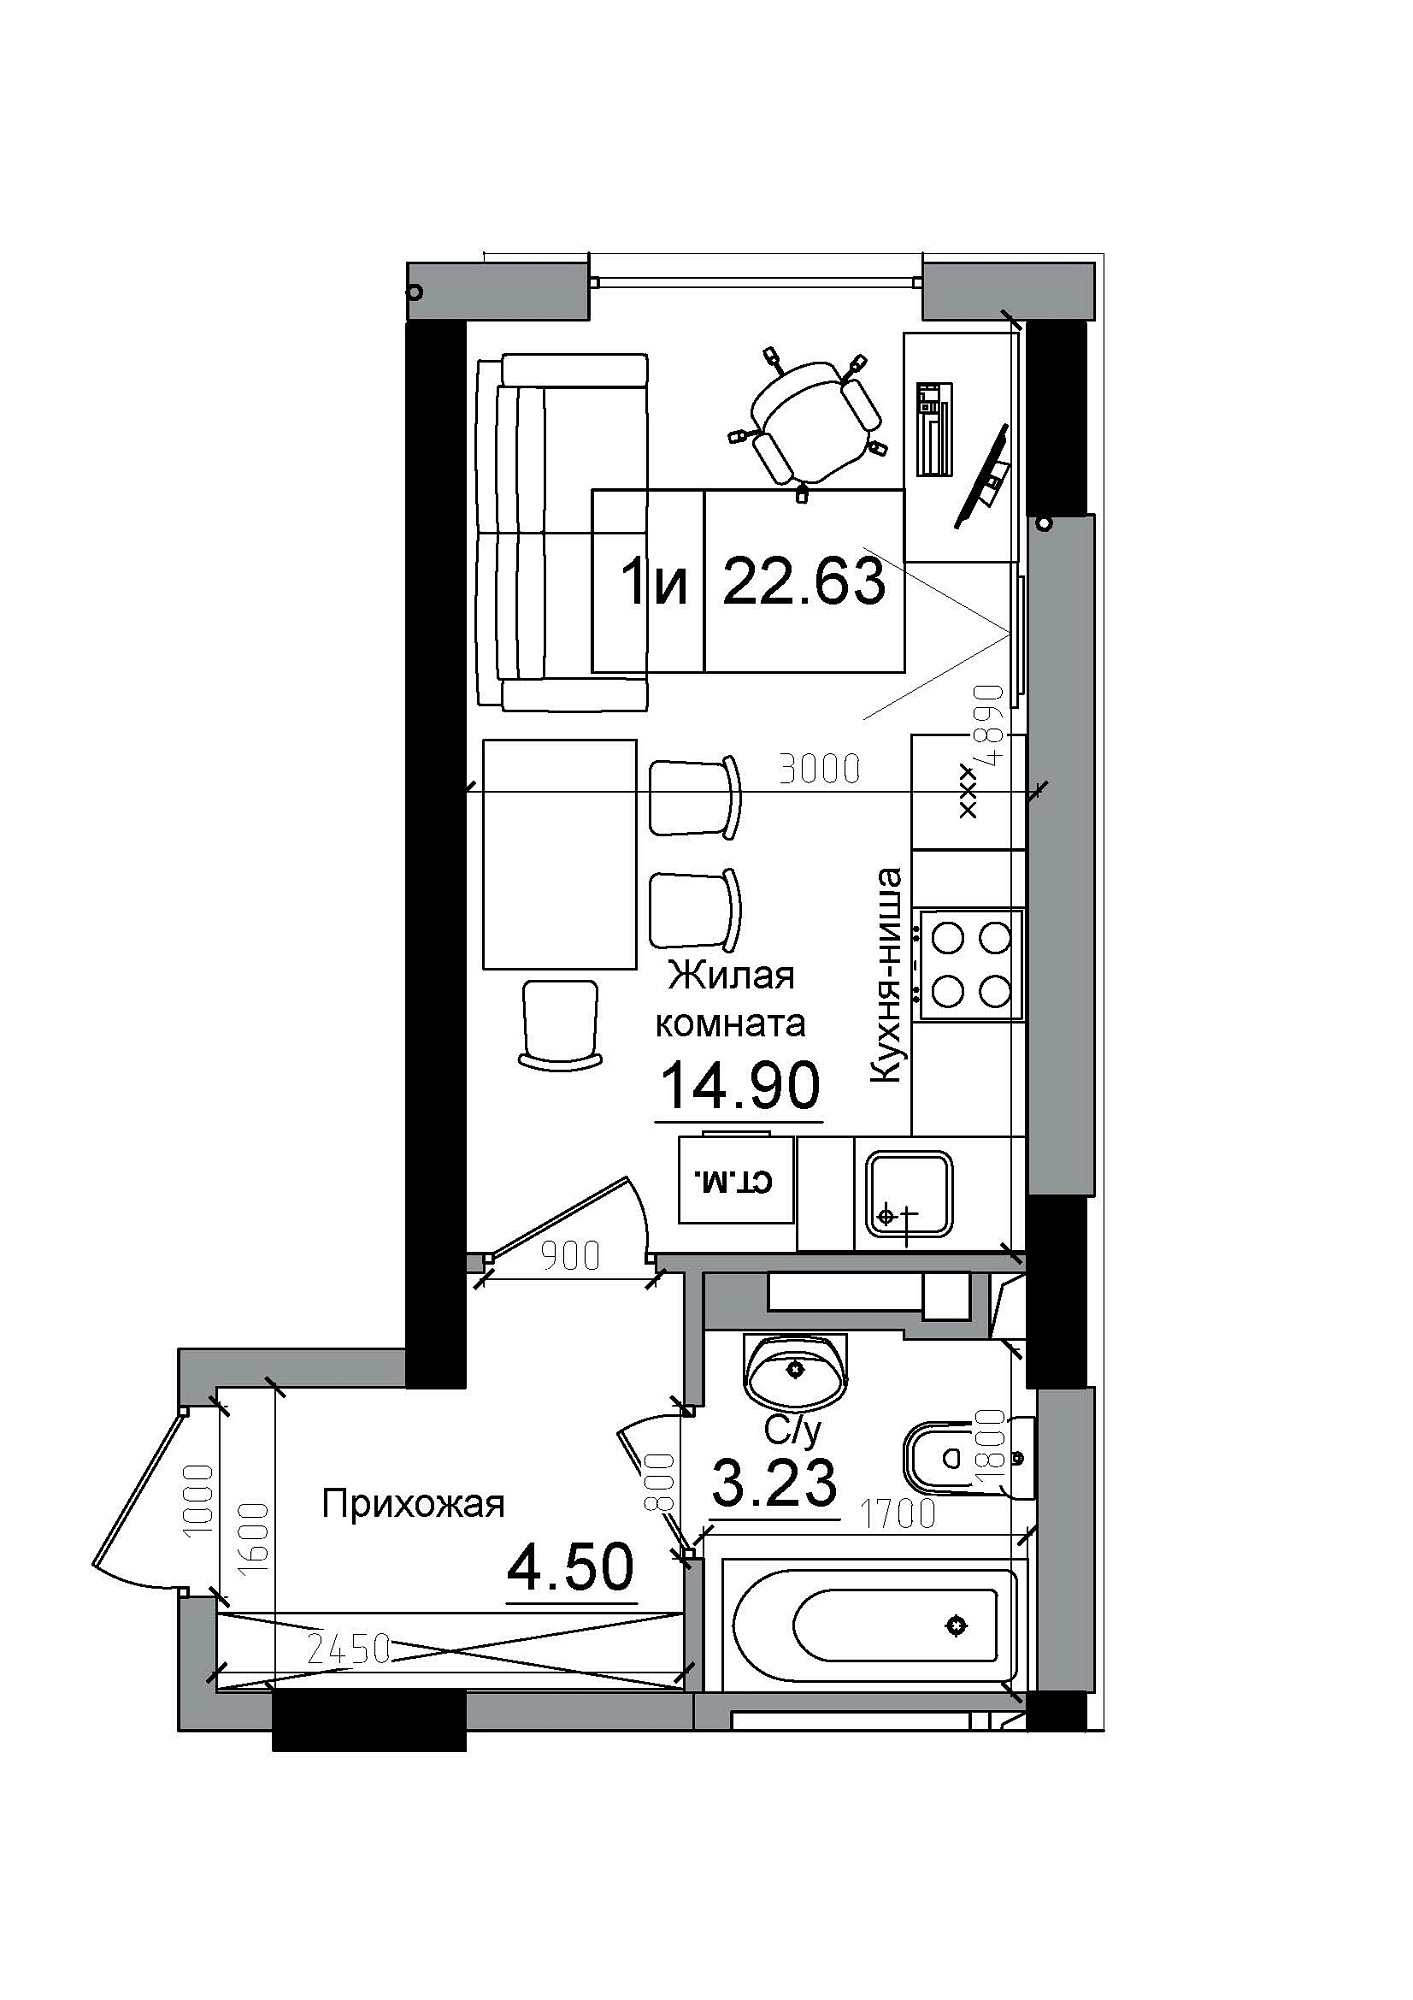 Planning Smart flats area 22.63m2, AB-12-08/00011.